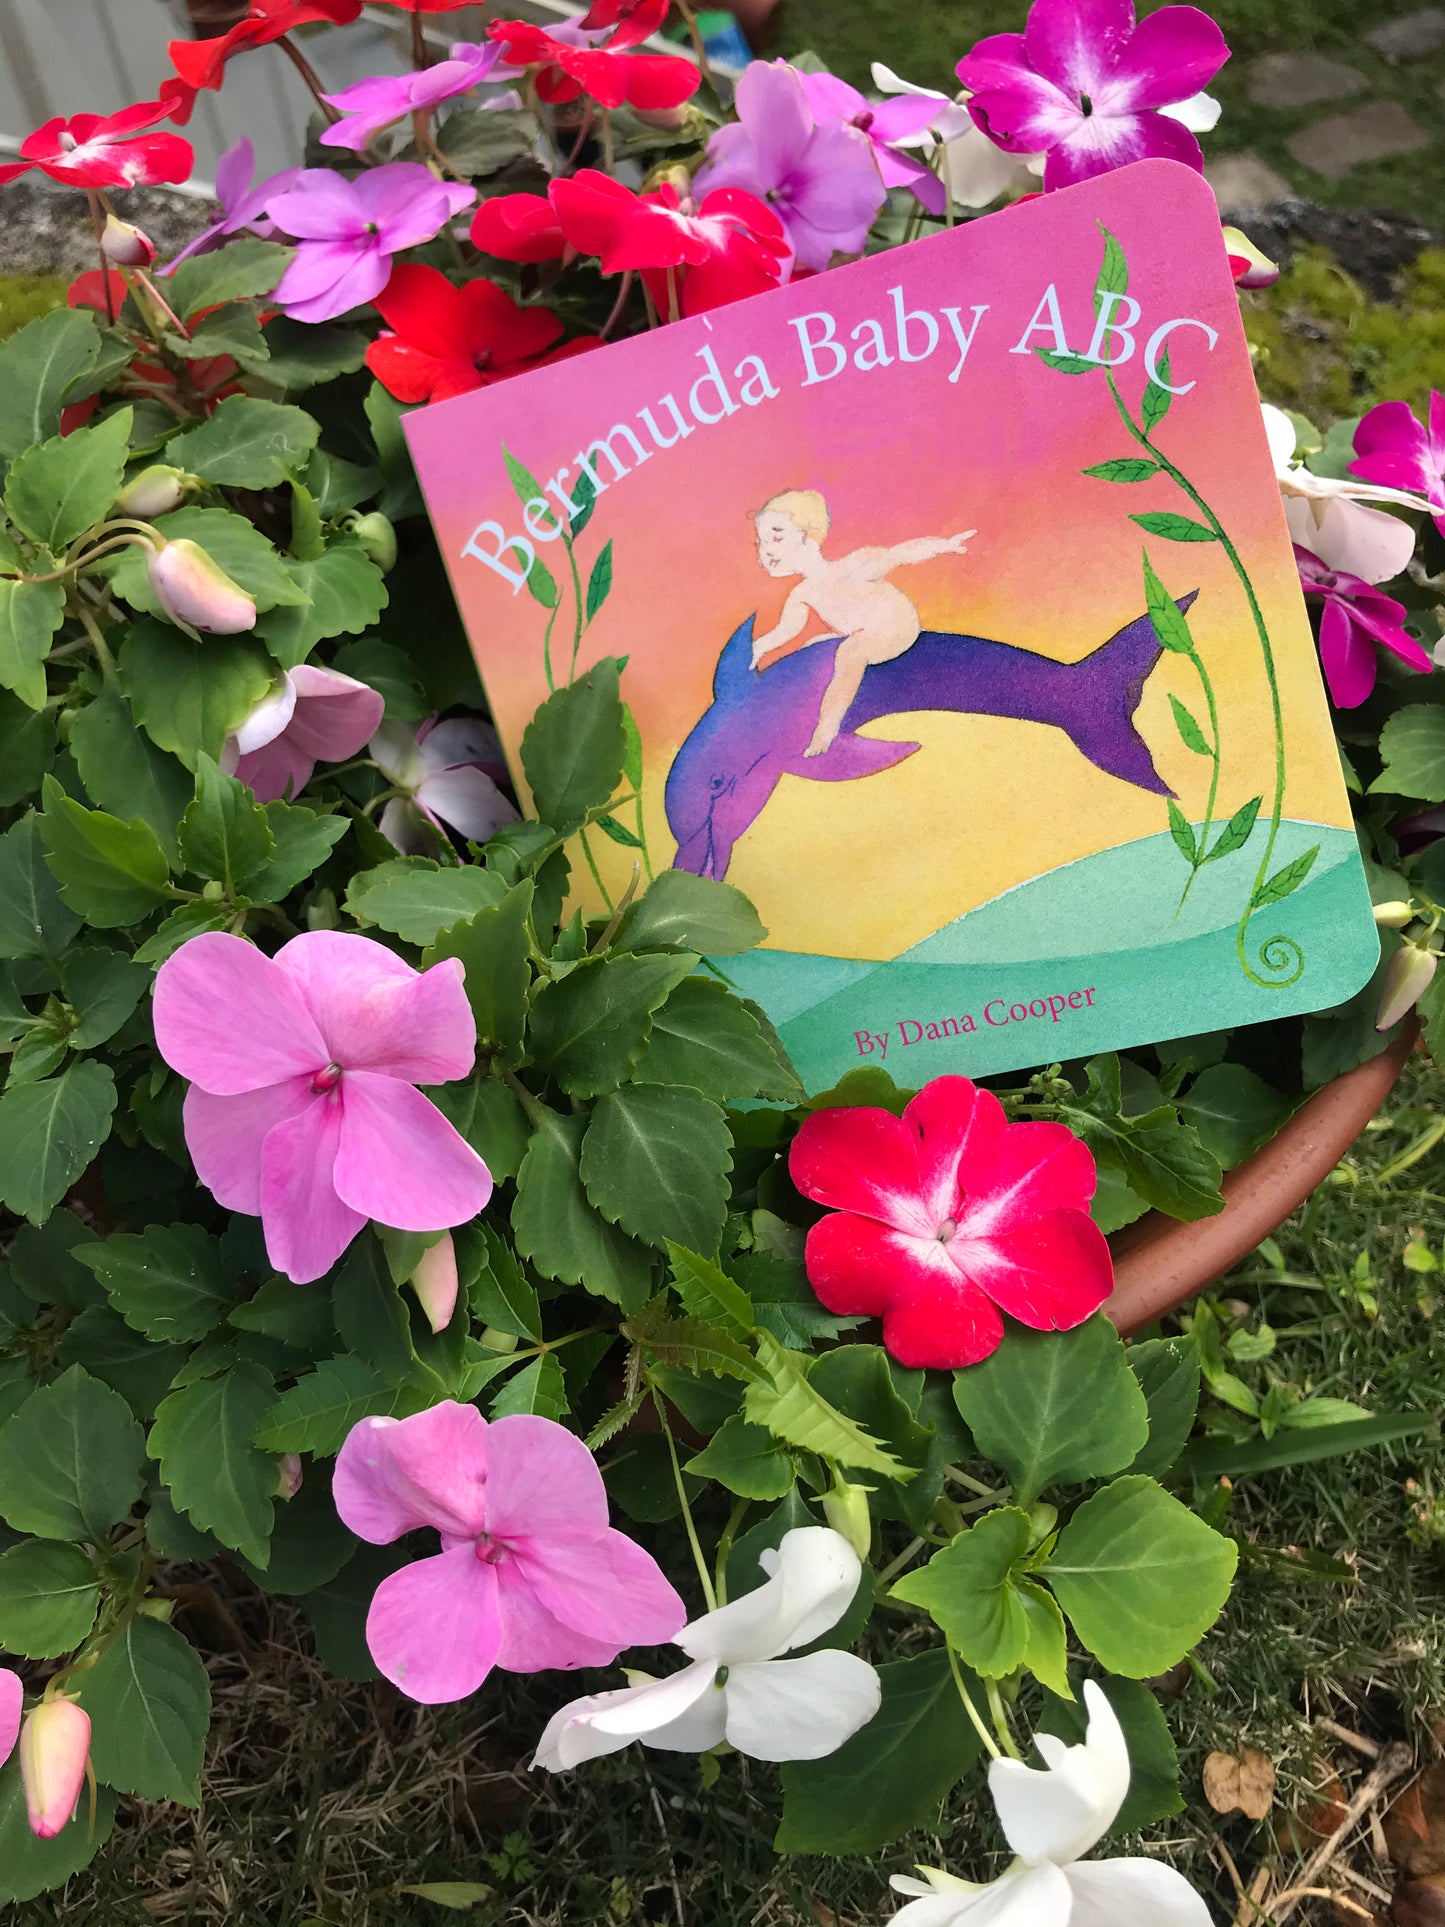 My Bermuda Baby ABC book